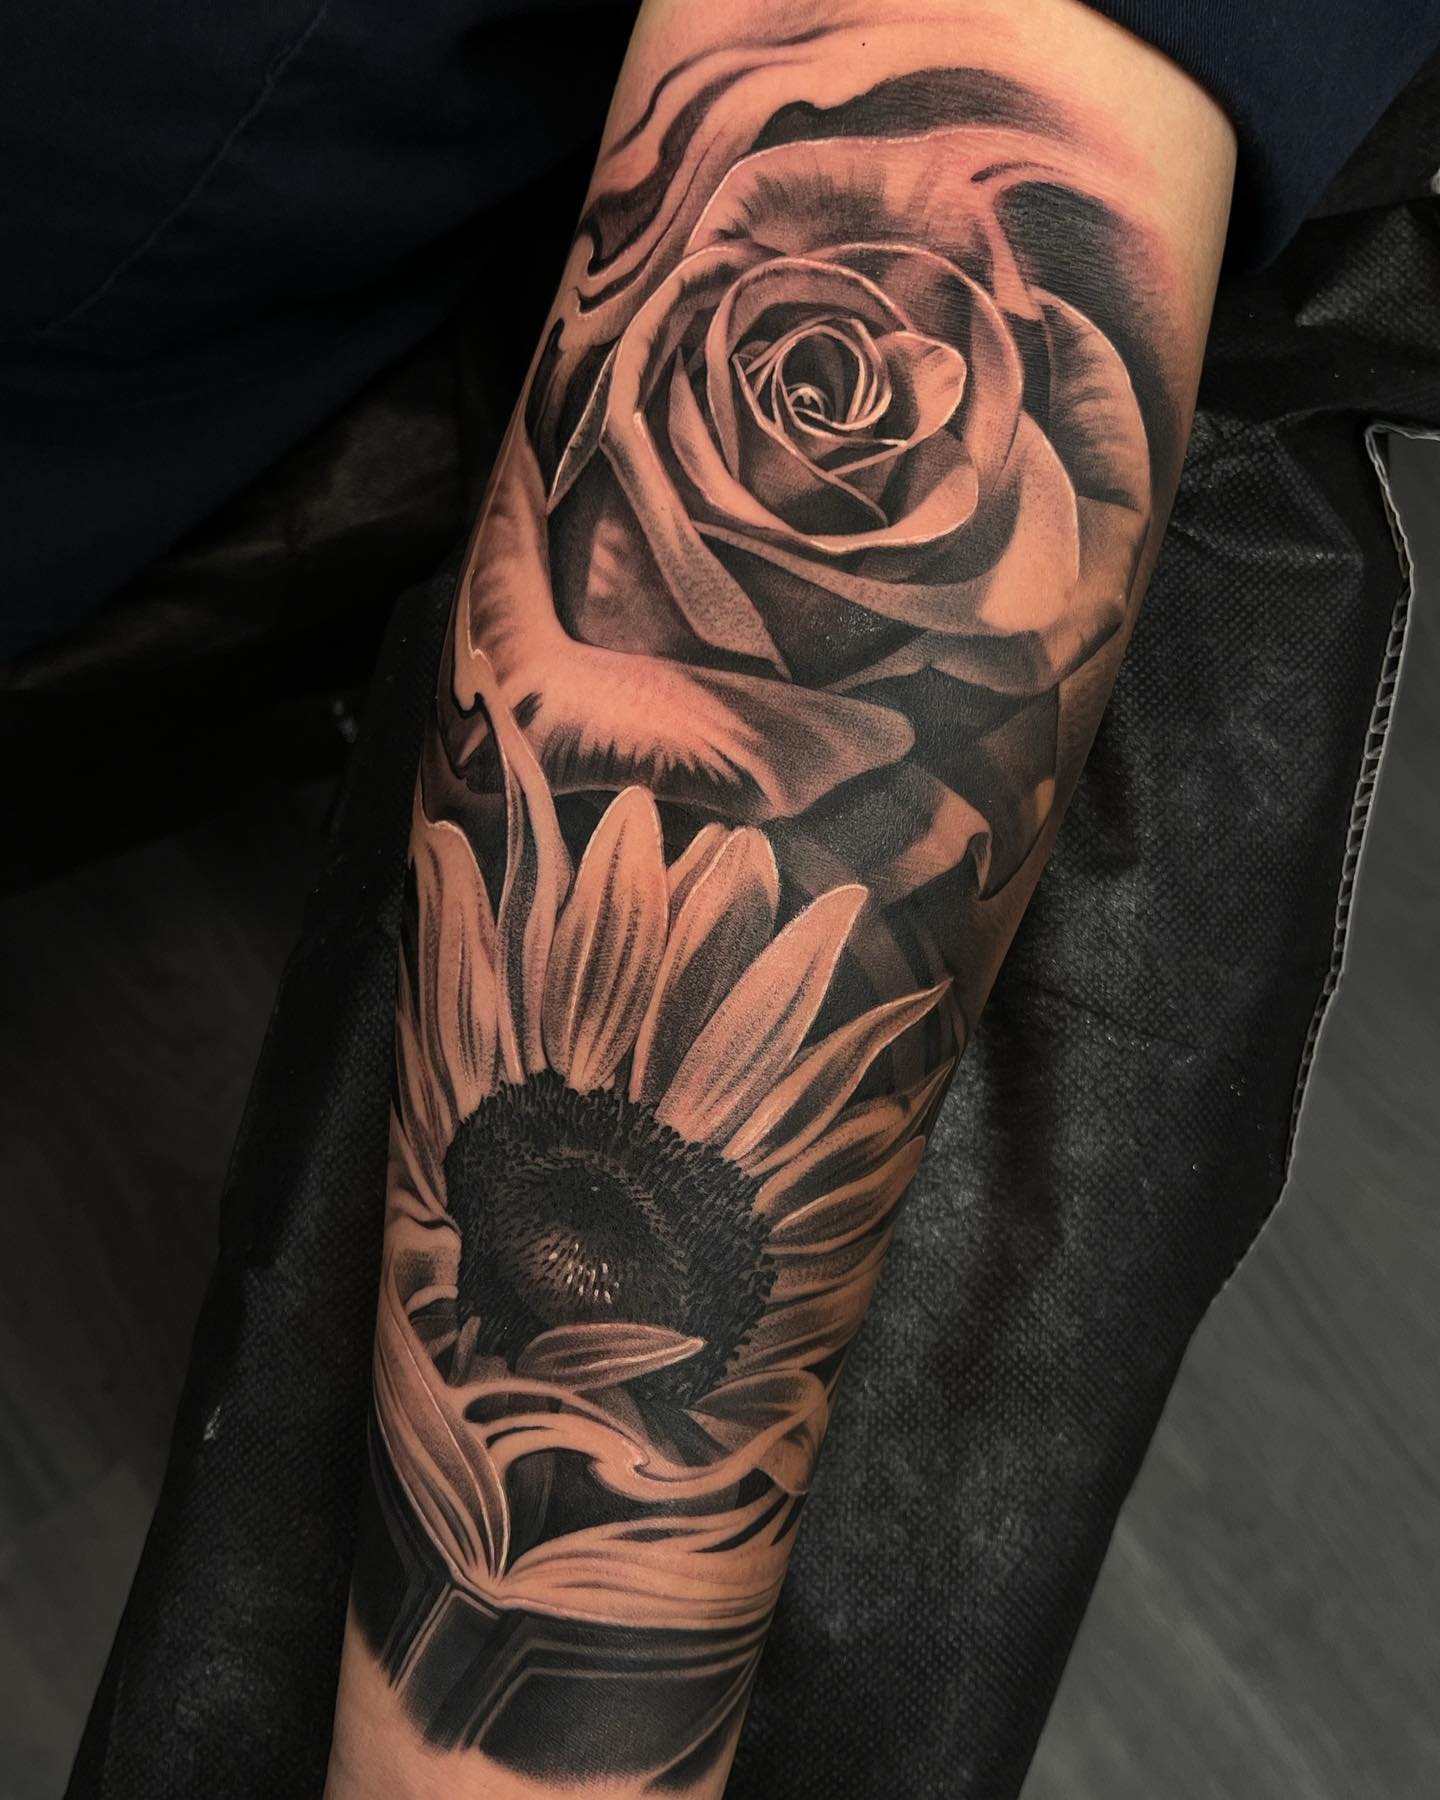 Elegant Black and Grey Floral Tattoo on Forearm